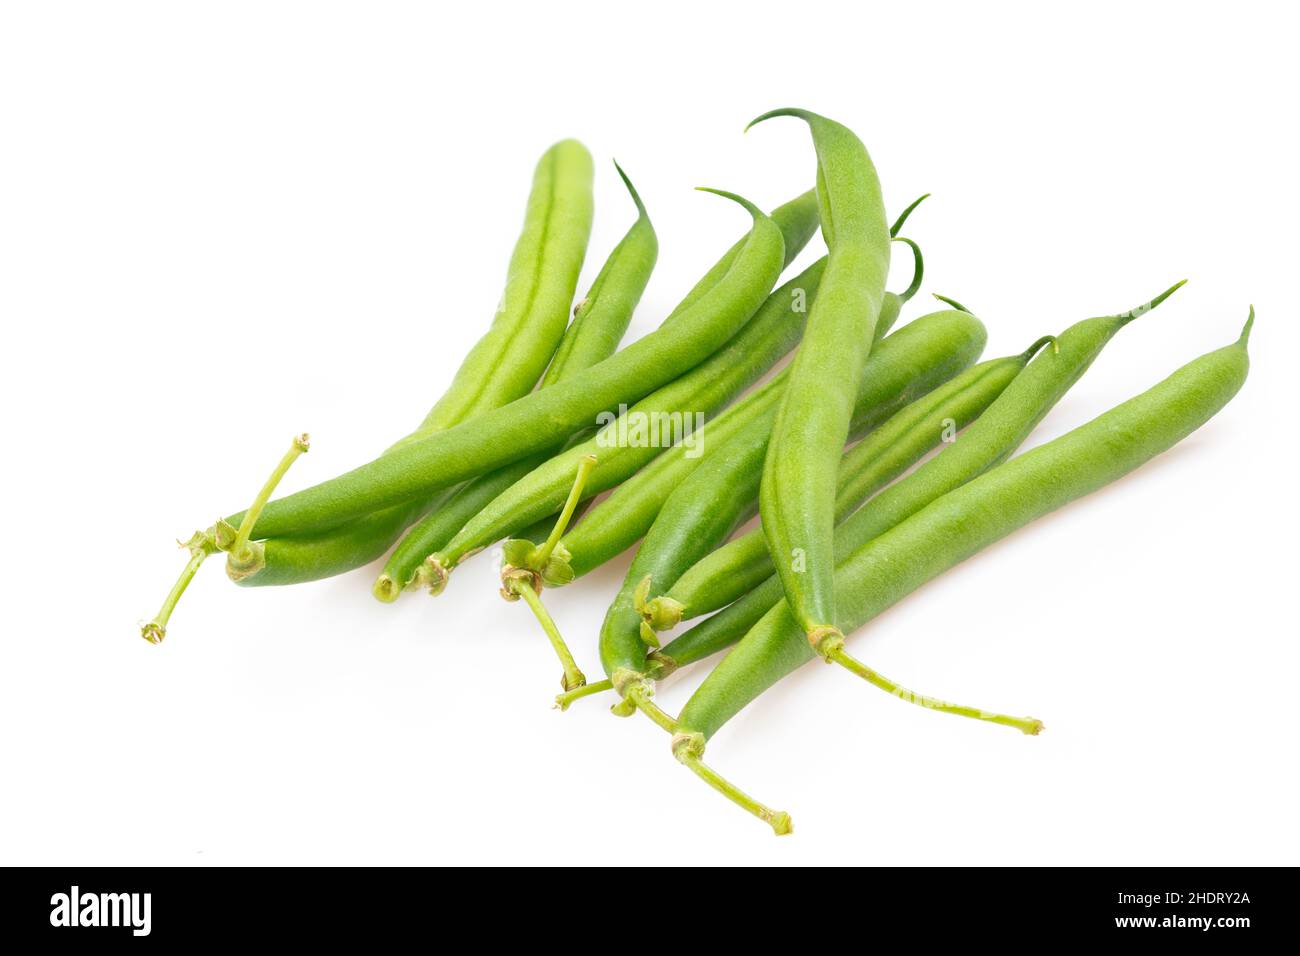 bush bean, bush beans Stock Photo